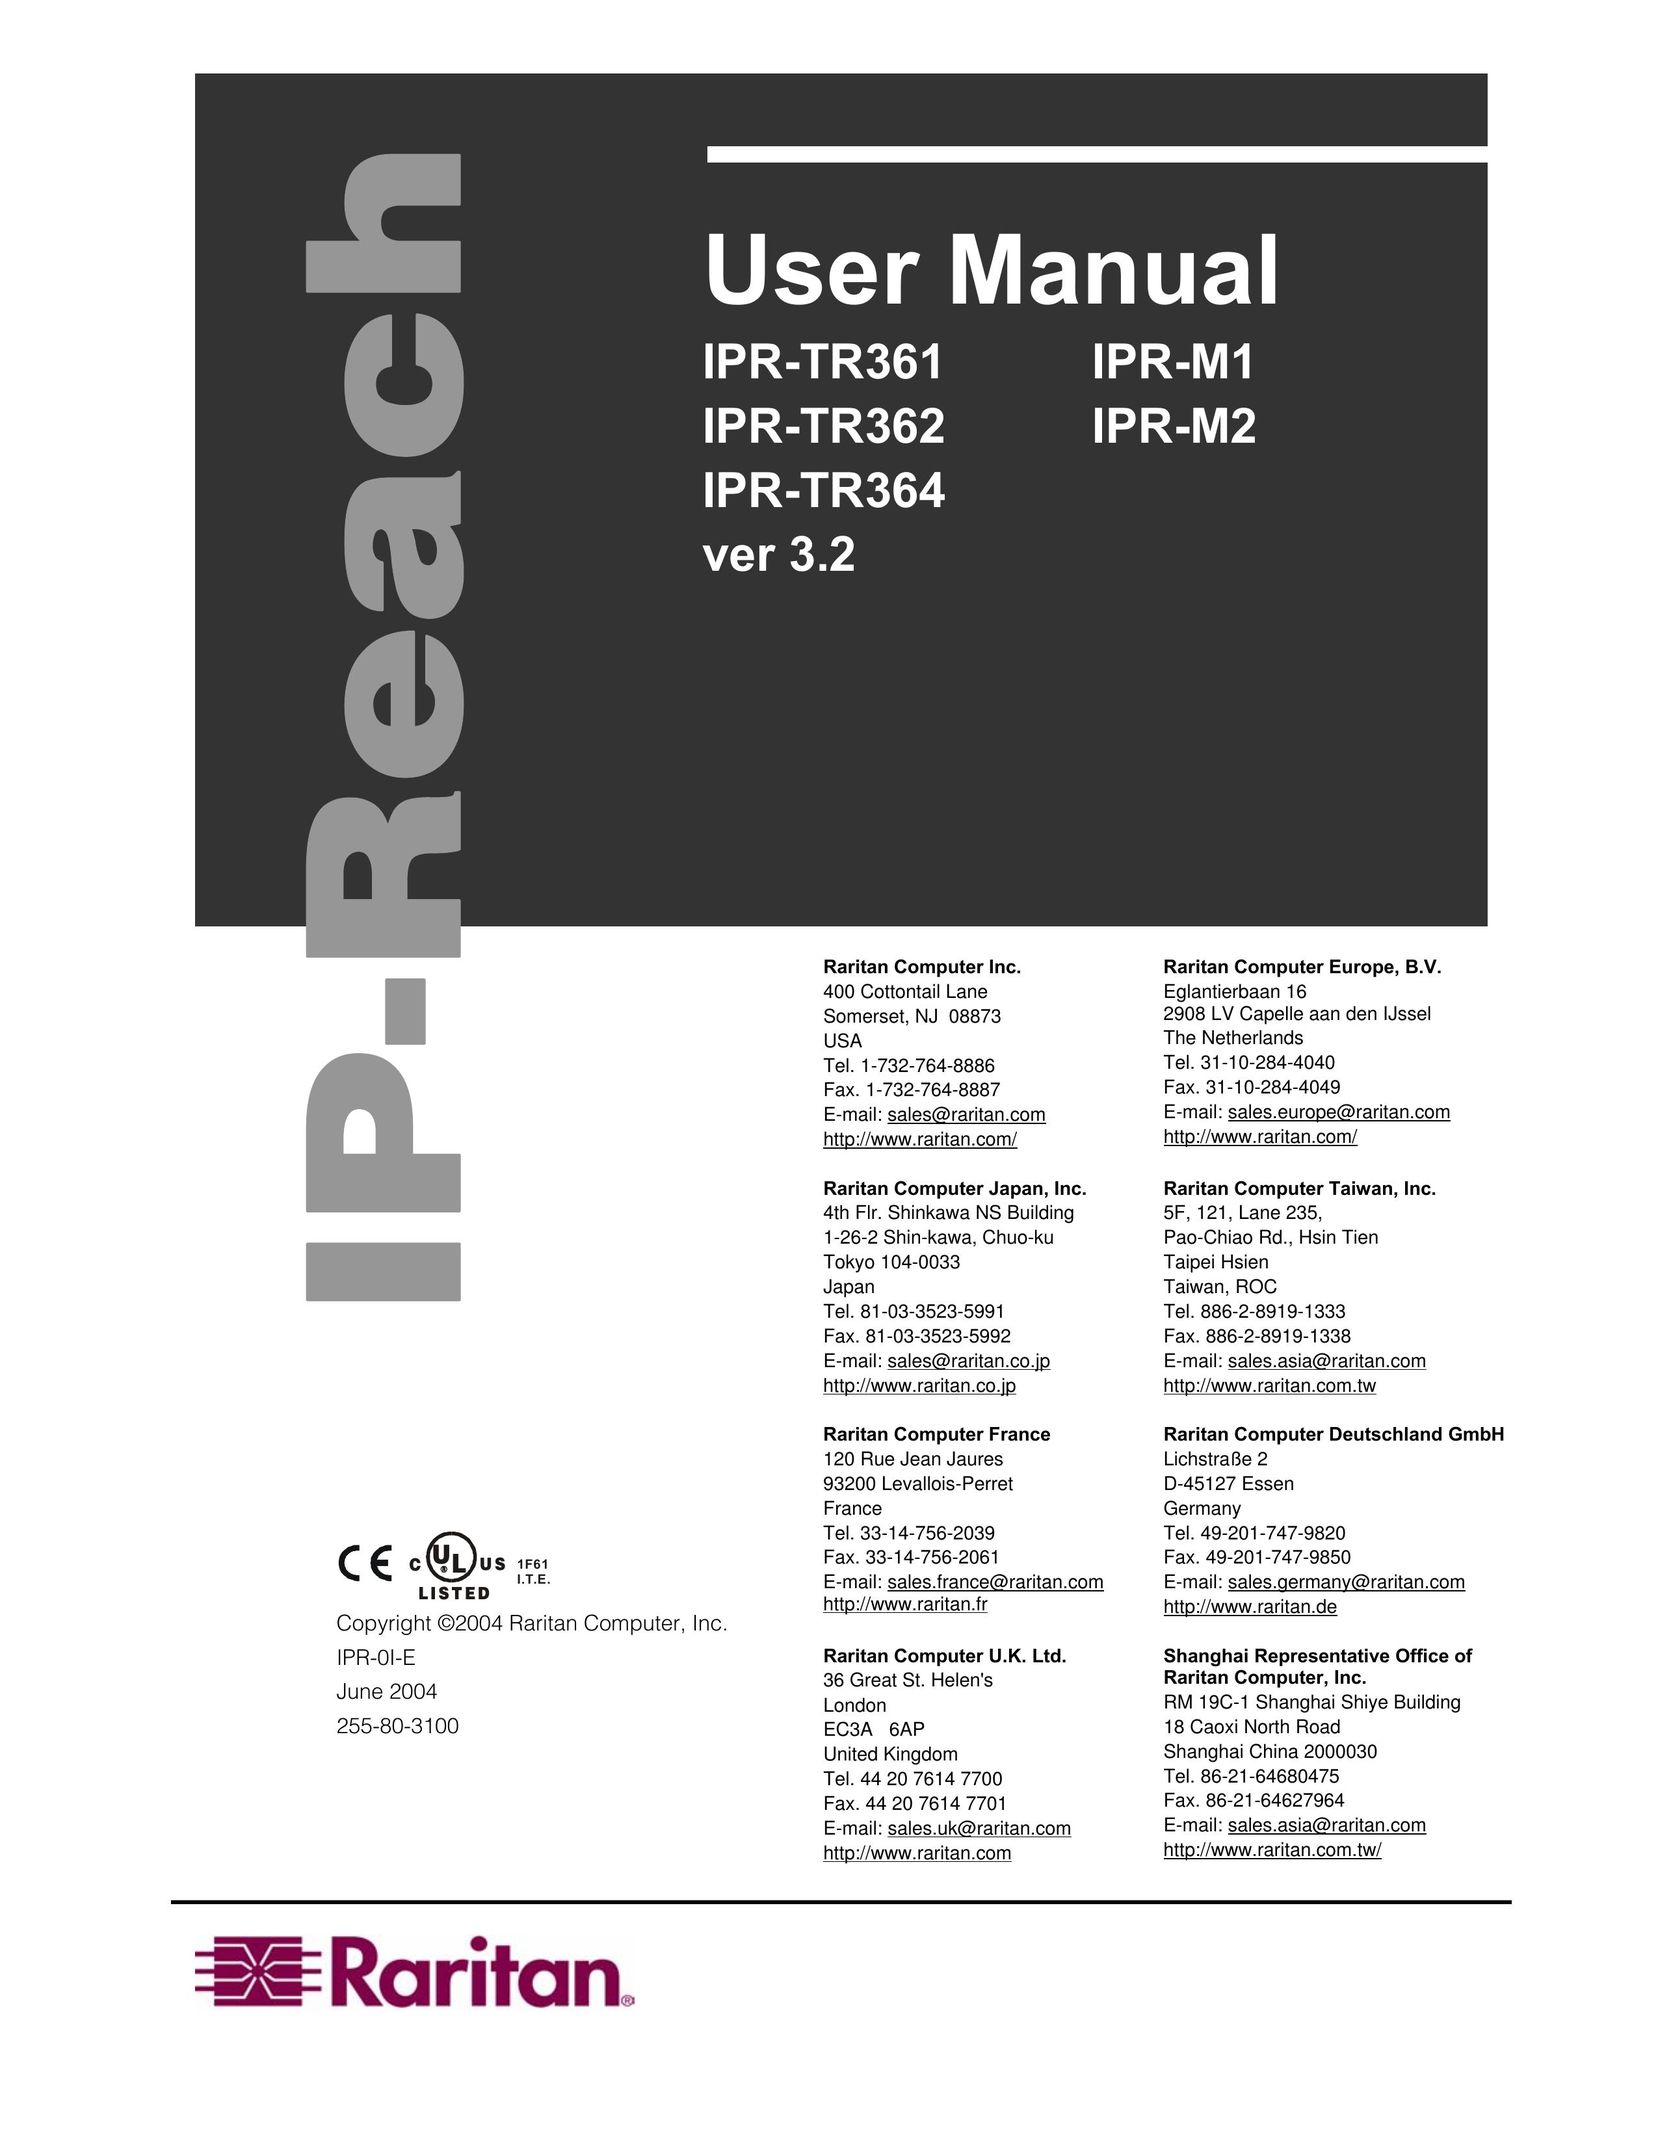 Raritan Computer IPR-M1 Network Card User Manual